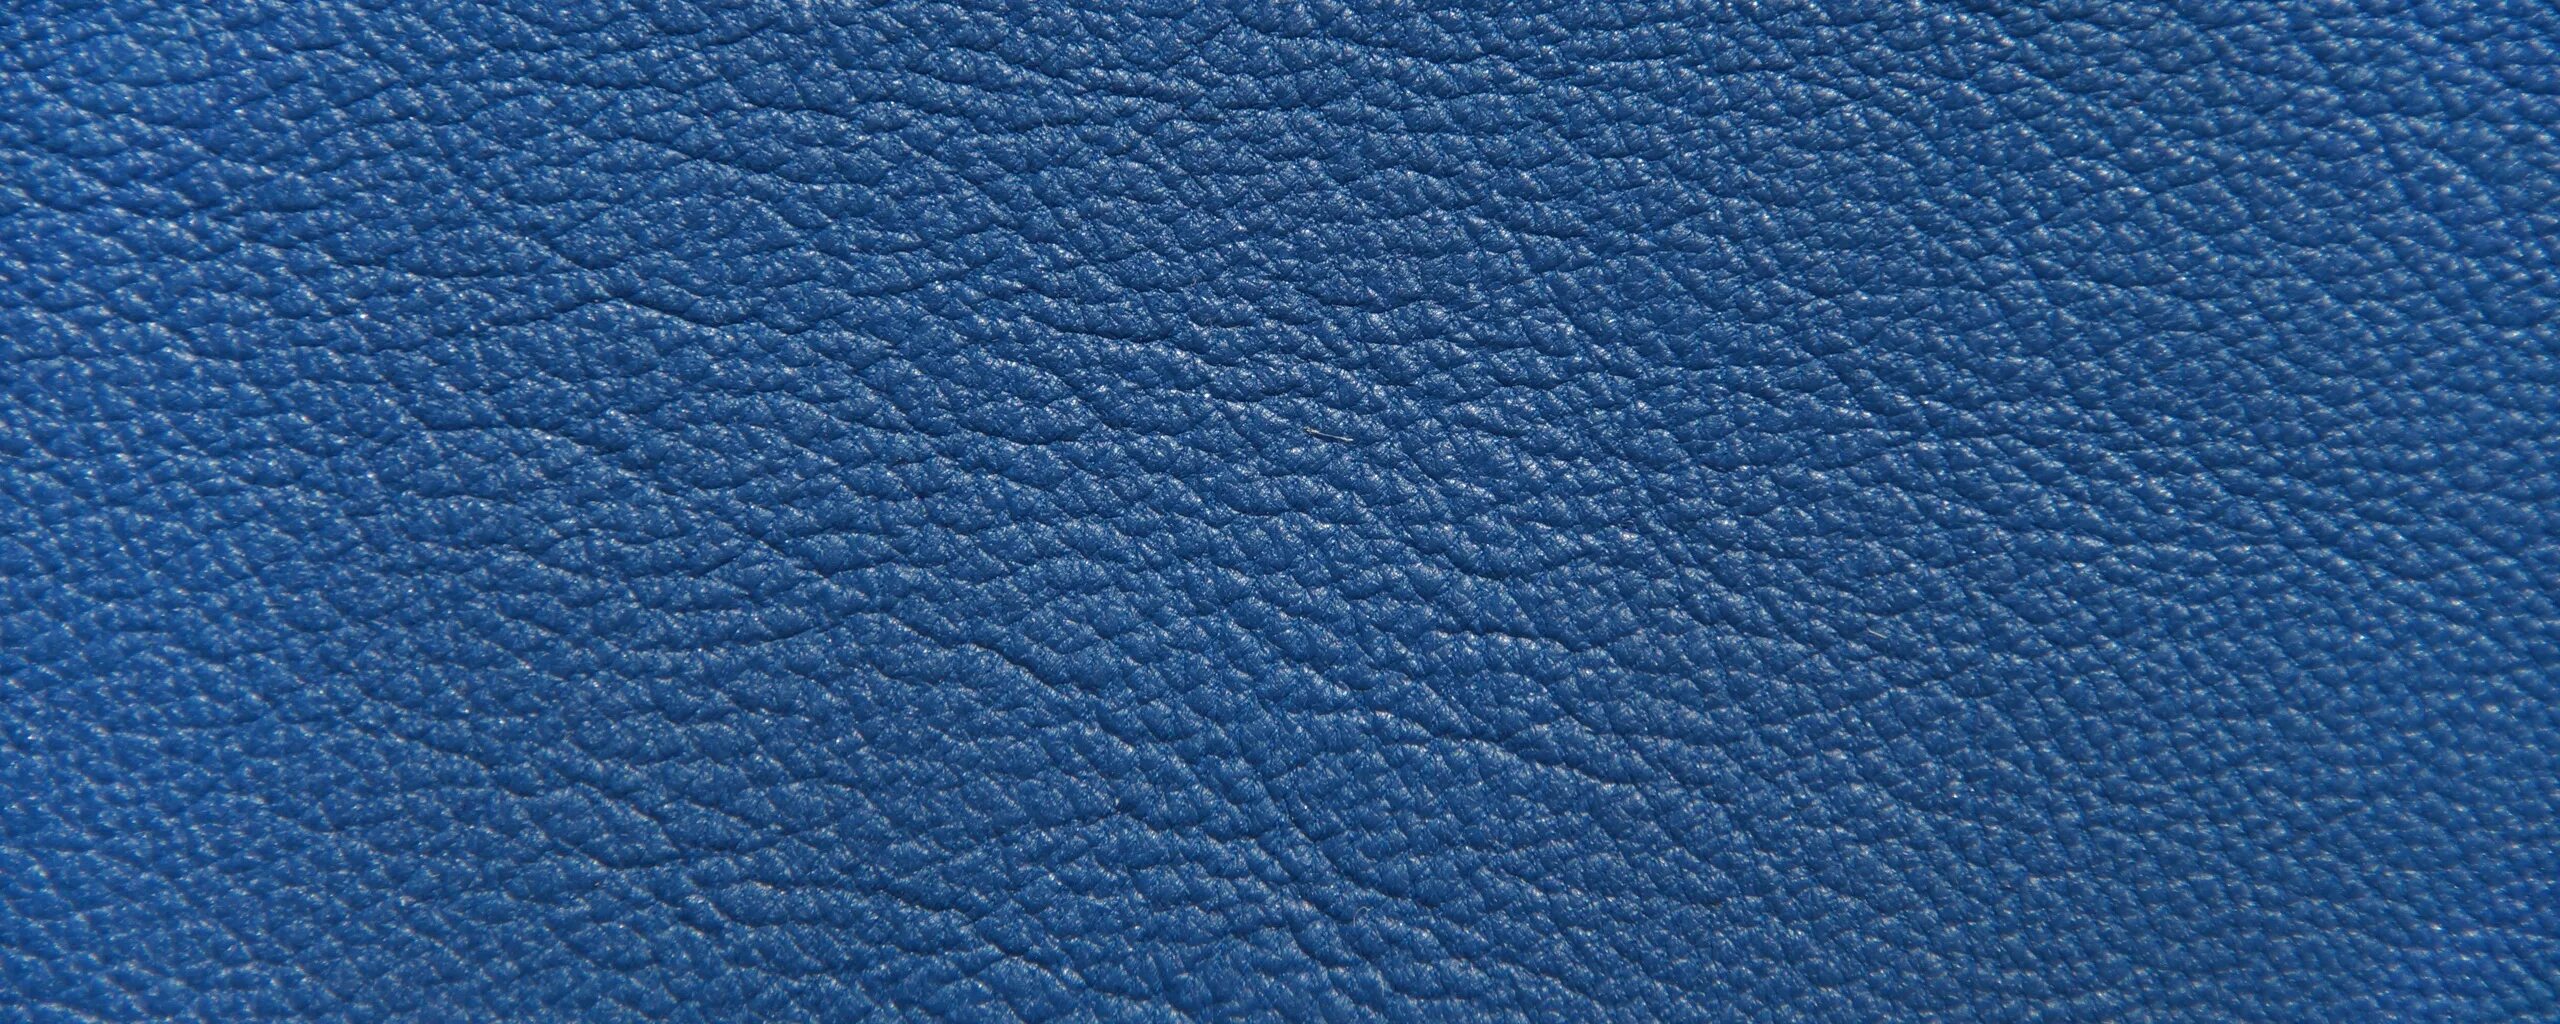 Фото 1920х1080 Блю лок. Bugatti Vela Leather Blue. Leather blue